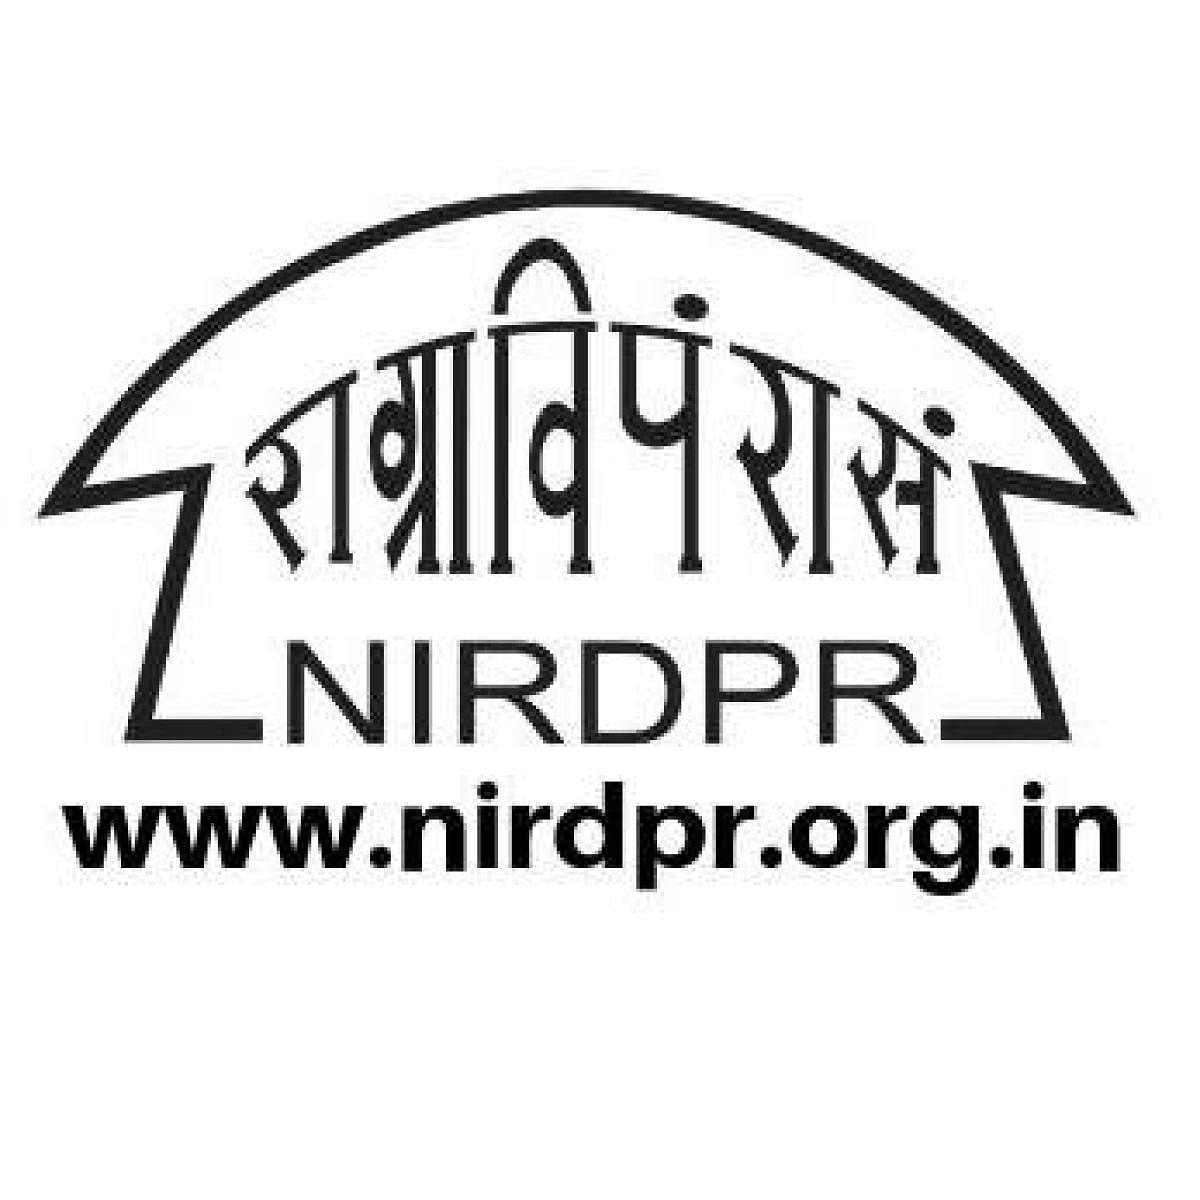 NIRDPR (Photo FB)